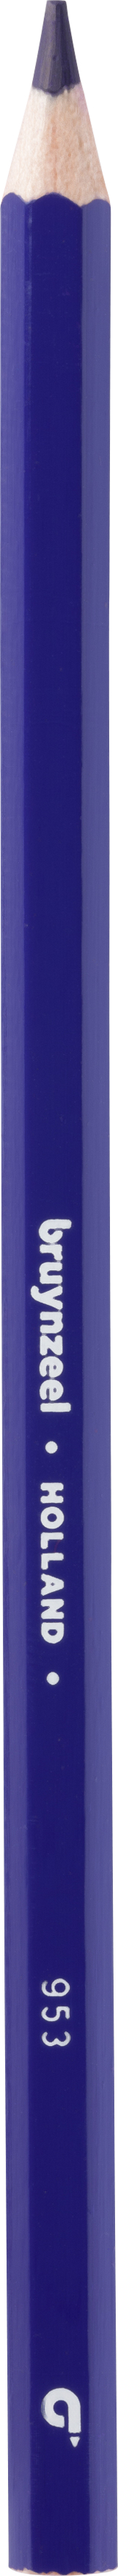 BRUYNZEEL Crayon de couleur Super 3.3mm 60516953 violet